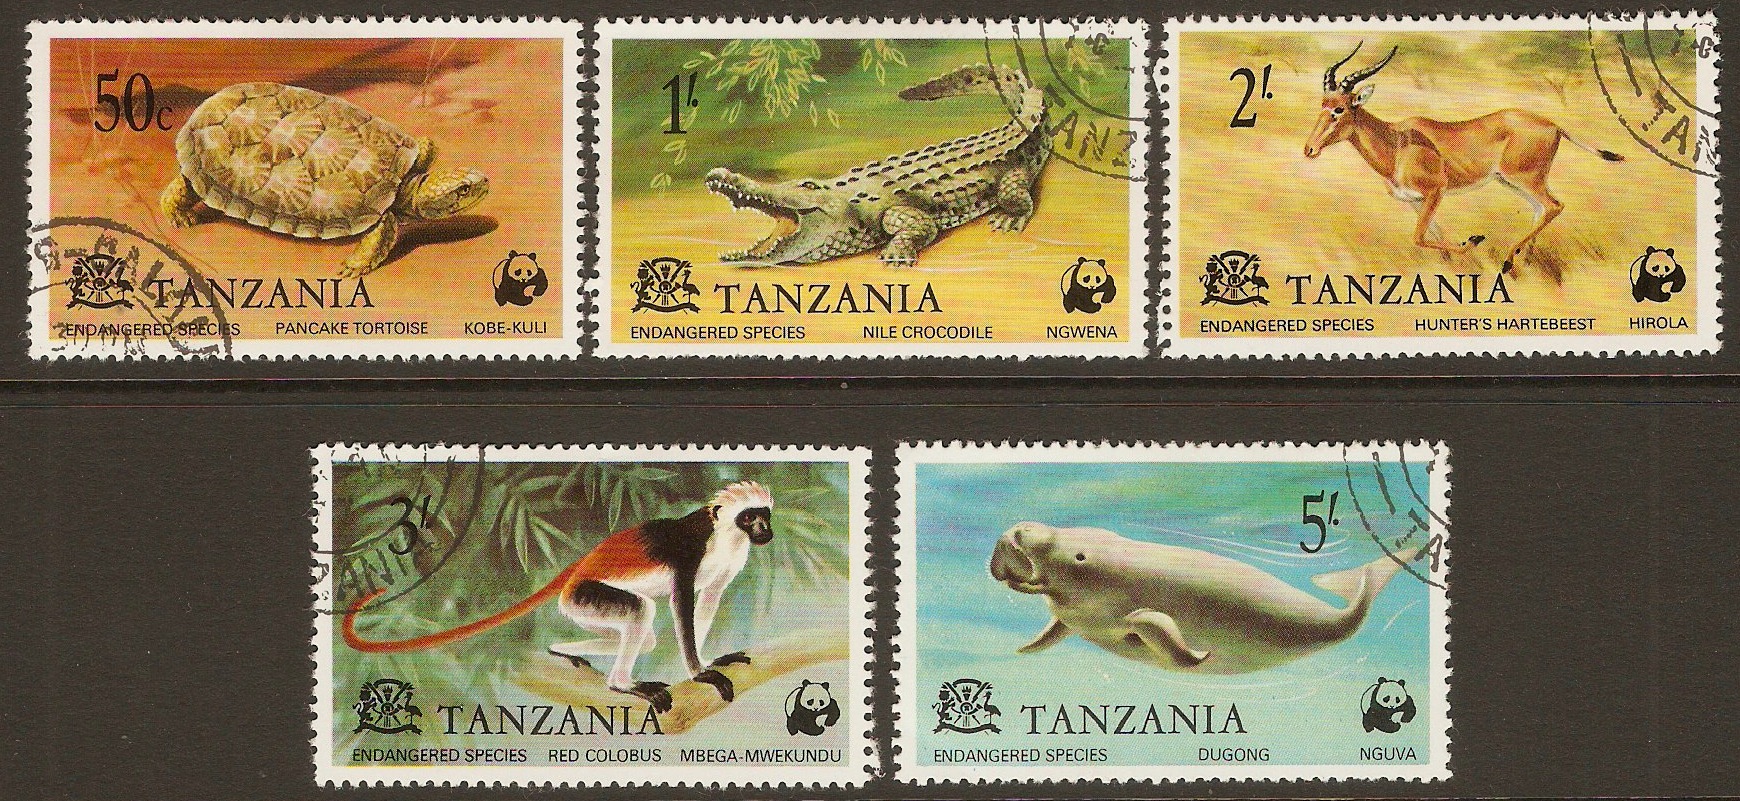 Tanzania 1977 Endangered Species set. SG212-SG216.